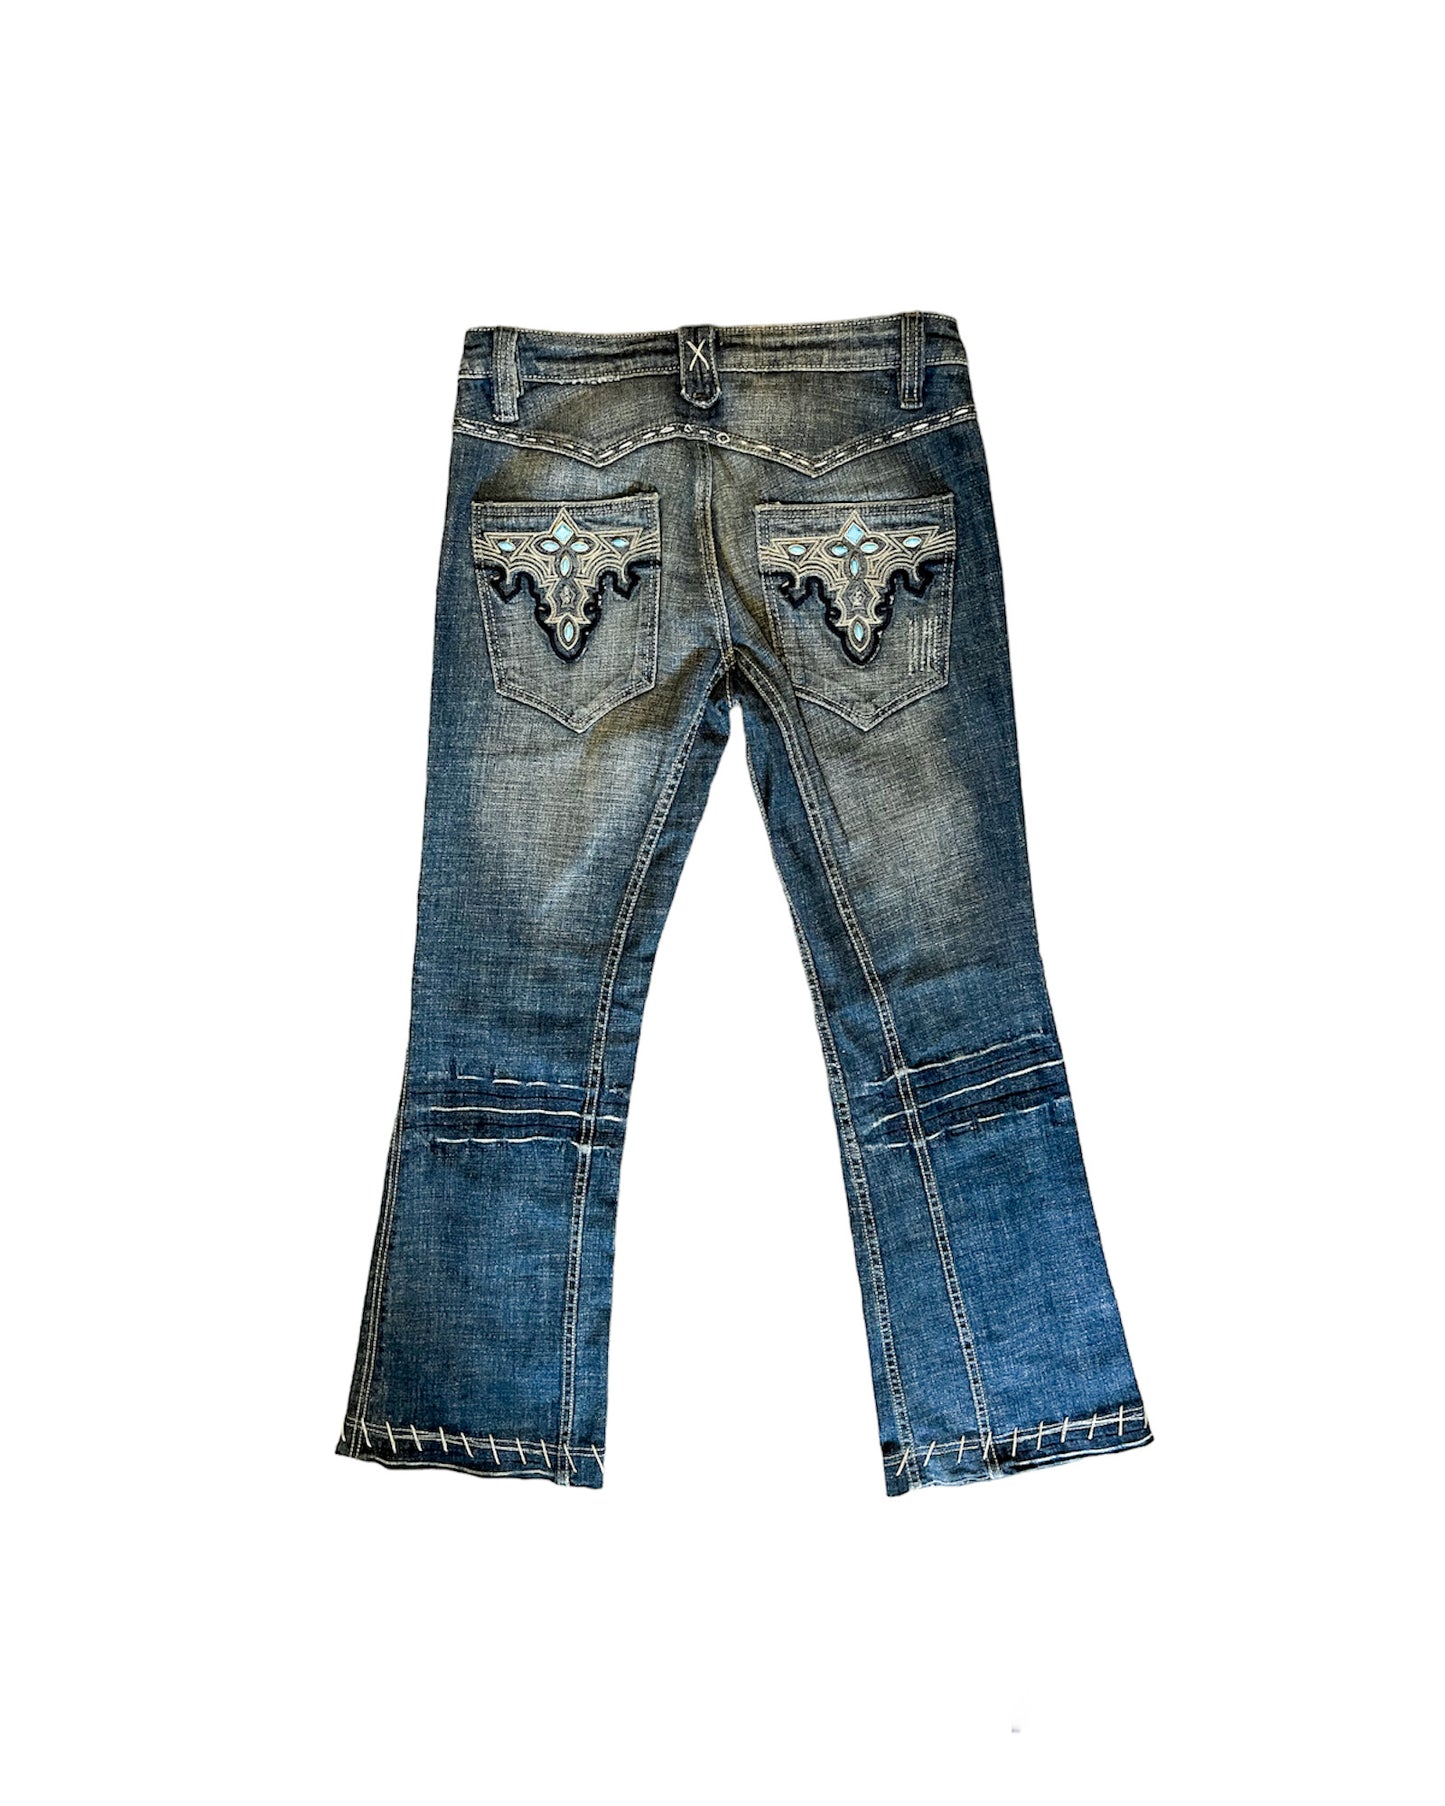 Antic Denim Tel Studded Jeans